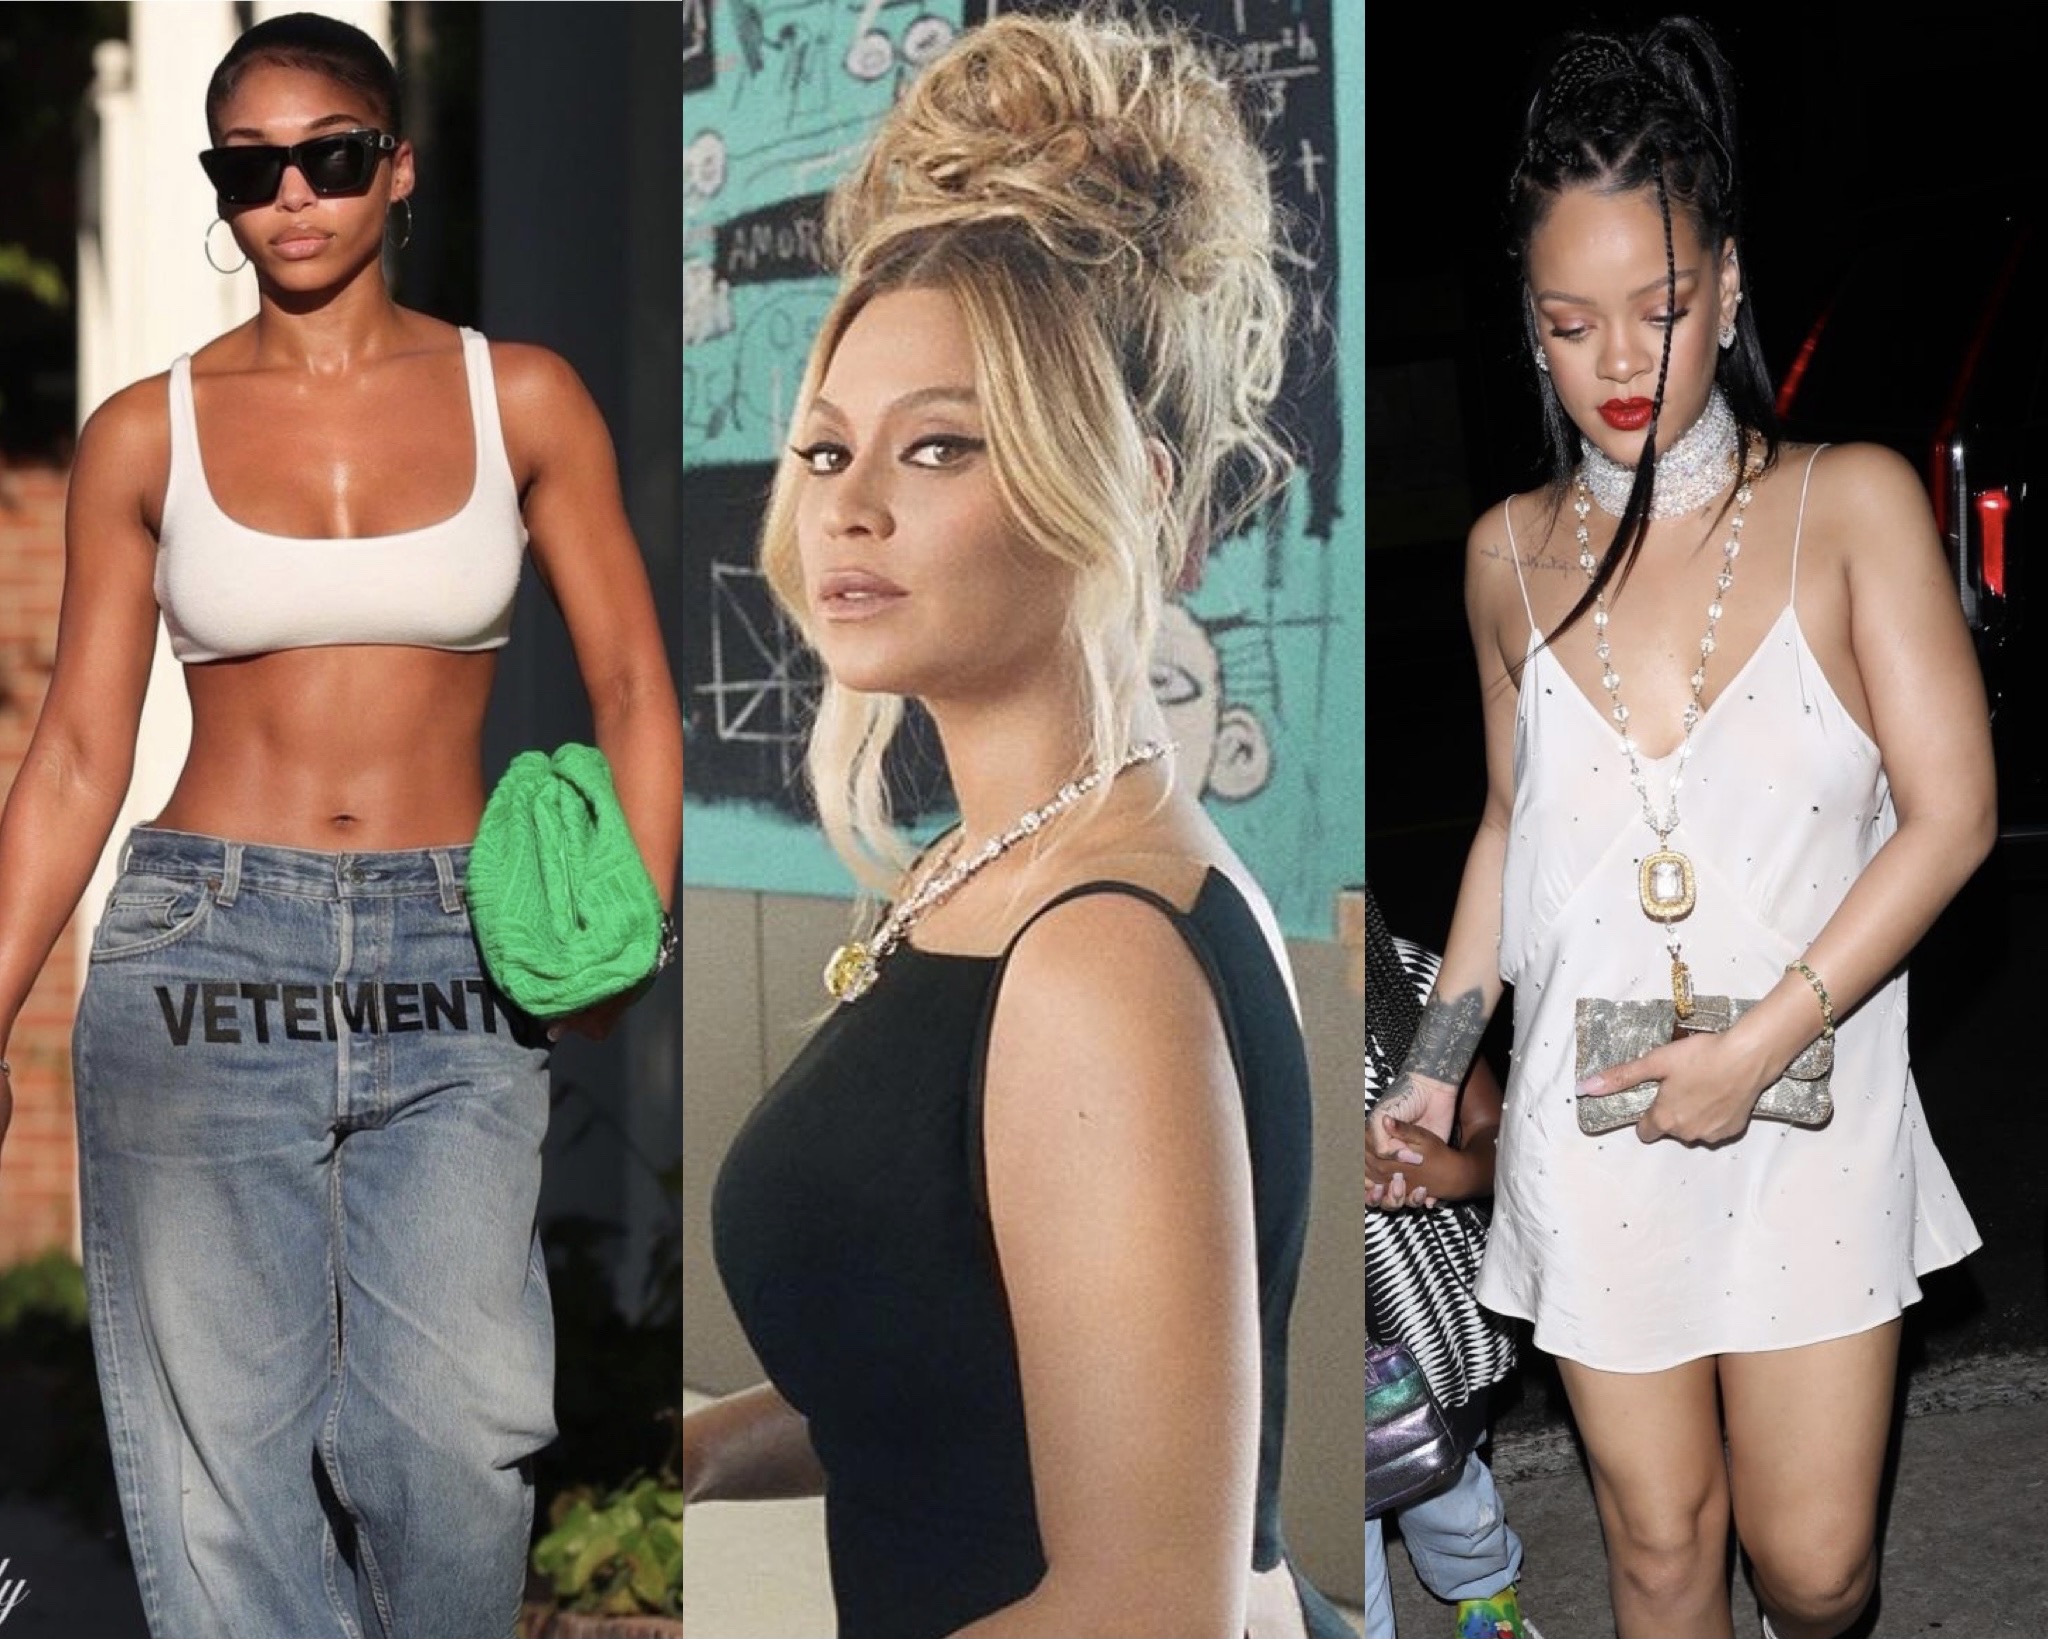 StyleInspiration - Rihanna. Loved this week's street style looks